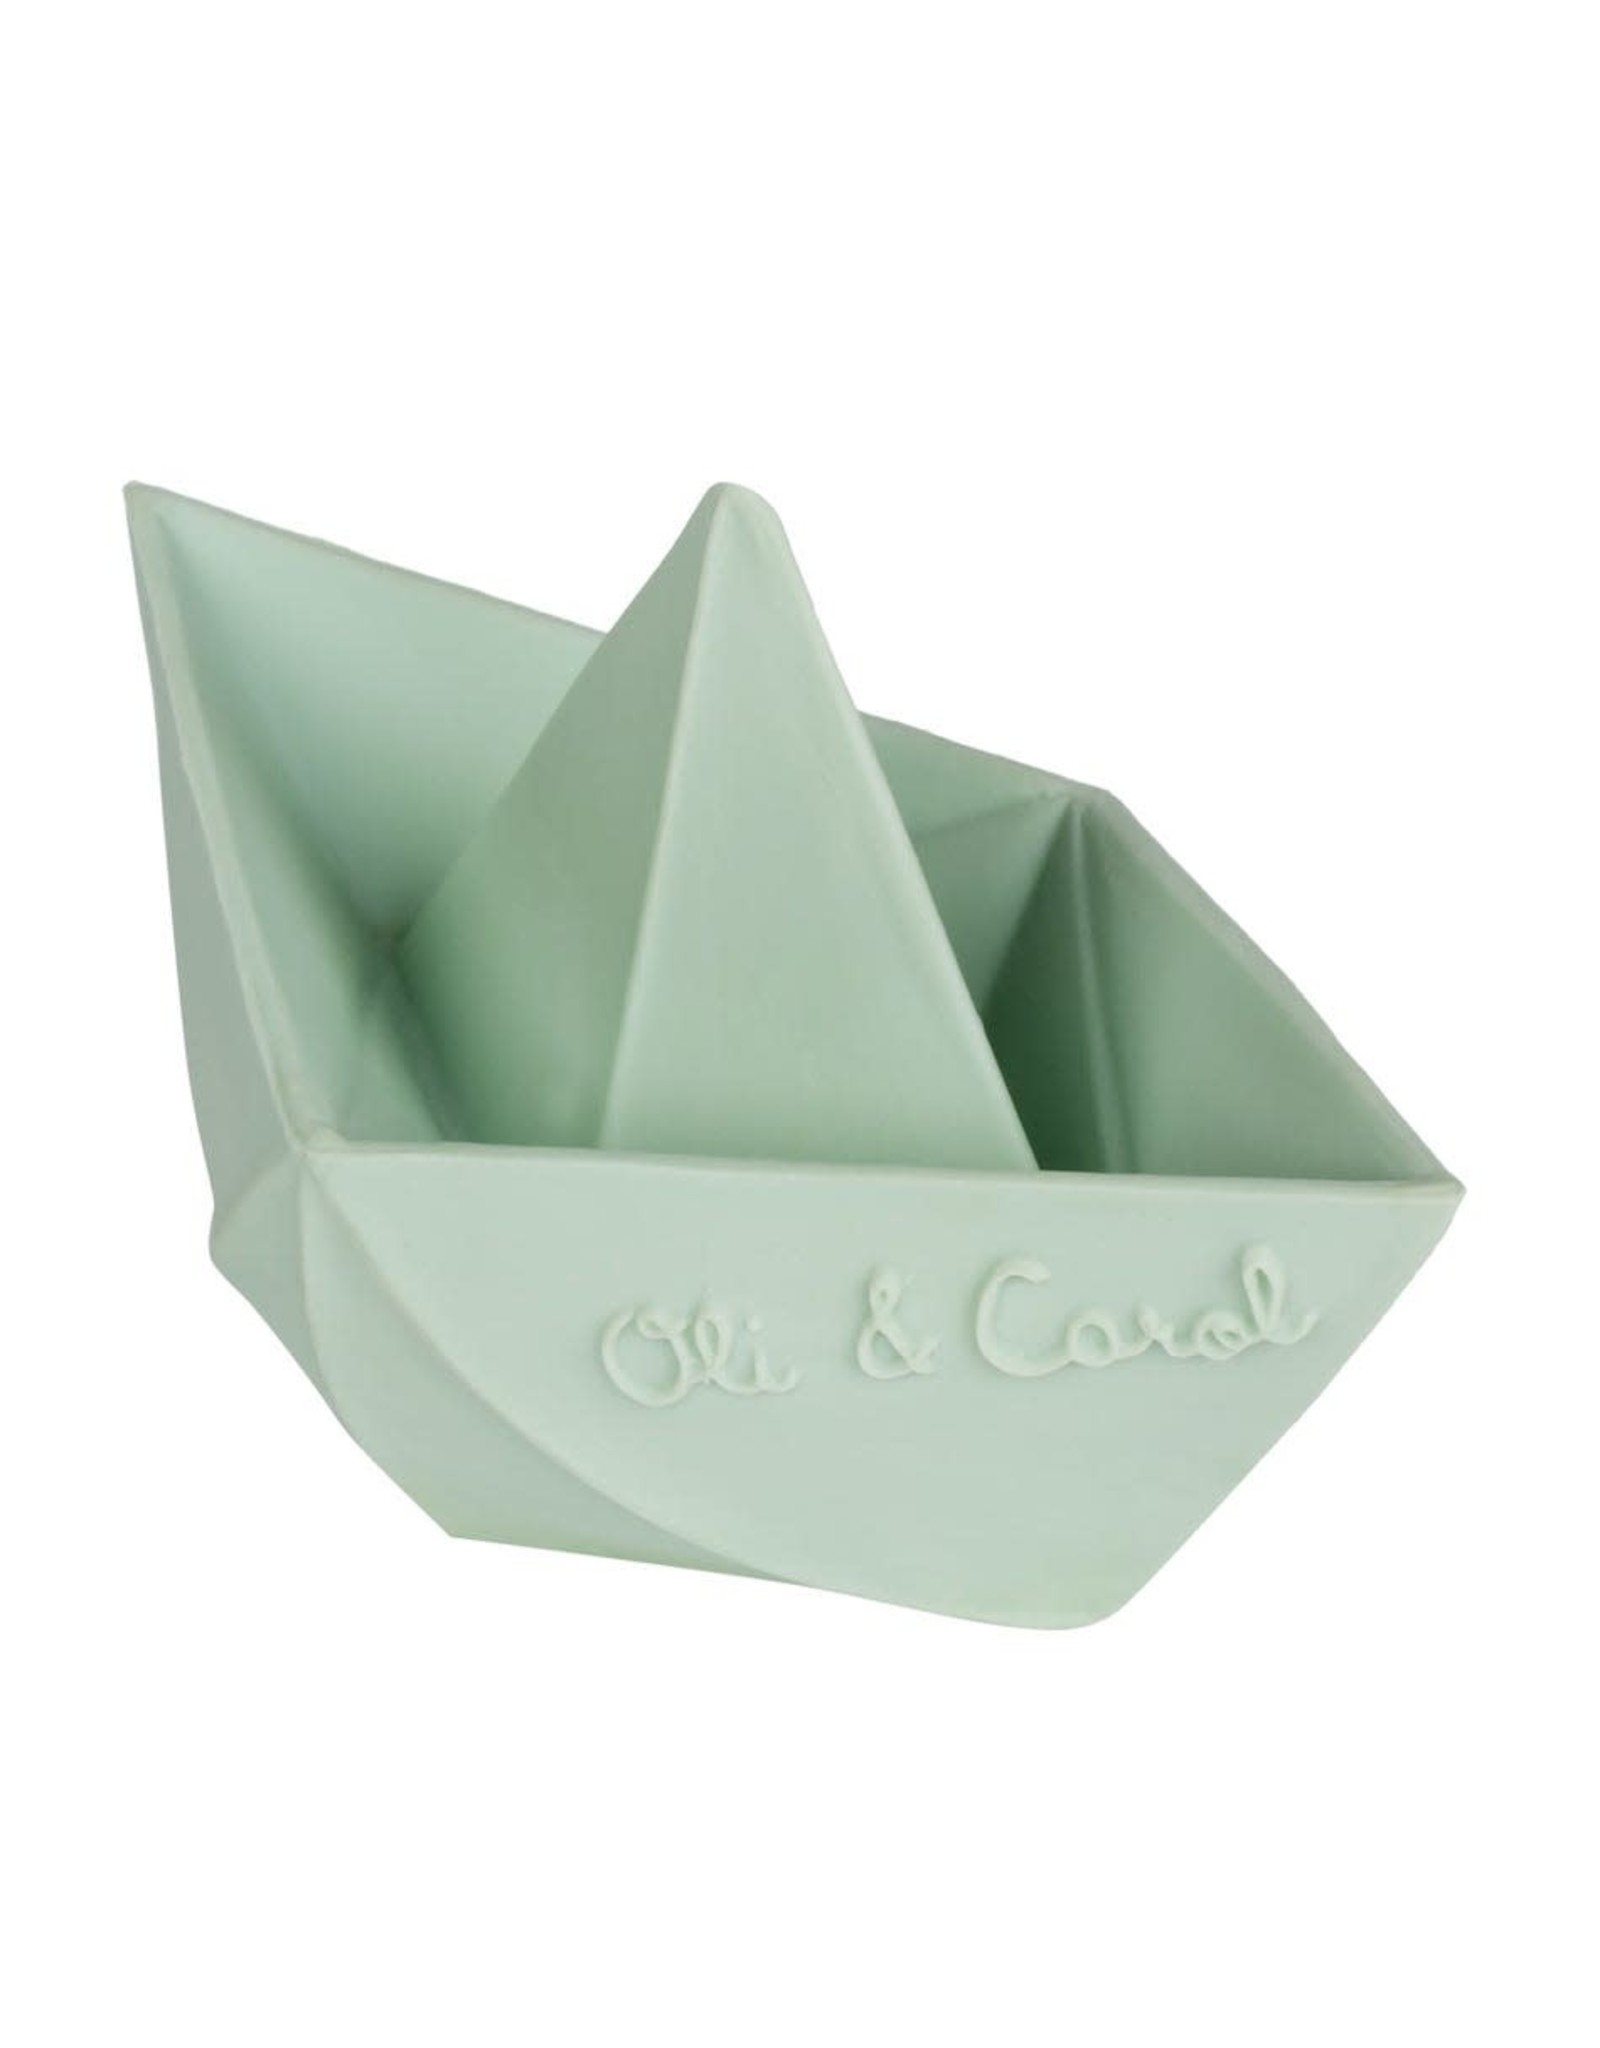 oli & carol origami boat